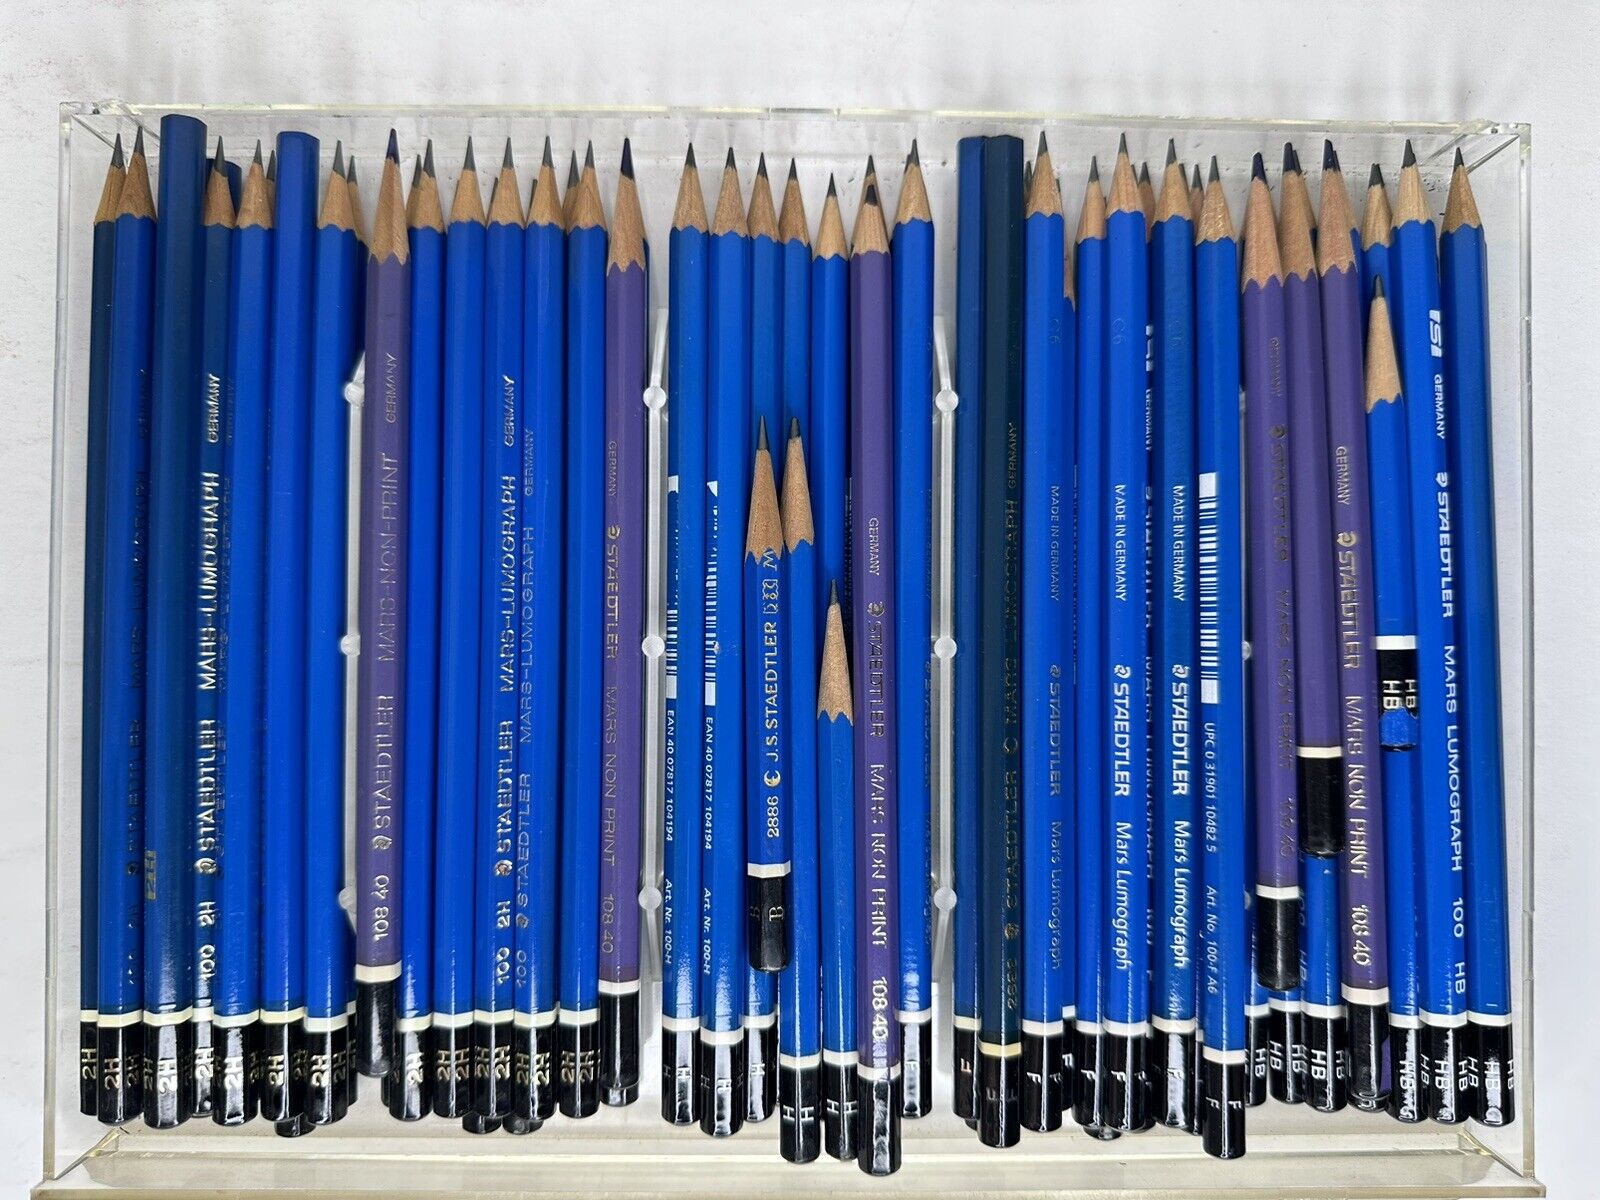 Rare 1960s Vintage Staedtler Pencil Drawer: 170+ Castell Prisma Colors, Blue 70s, and More - TreasuTiques